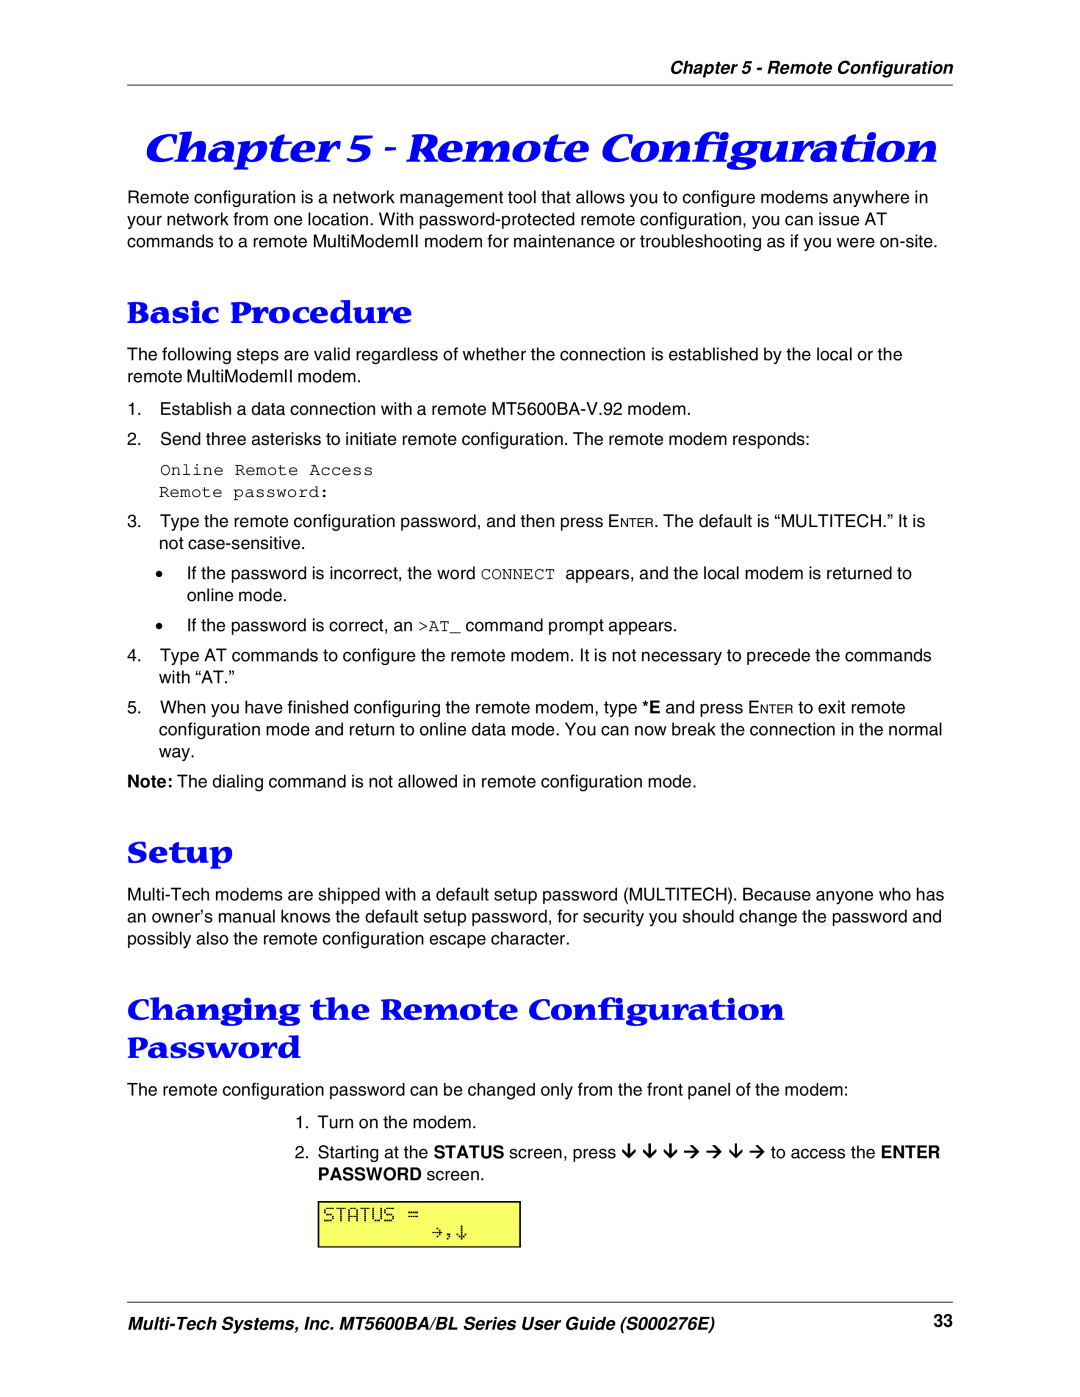 Multitech MT5600BA, MT5600BL manual Basic Procedure, Setup, Changing the Remote Configuration Password 